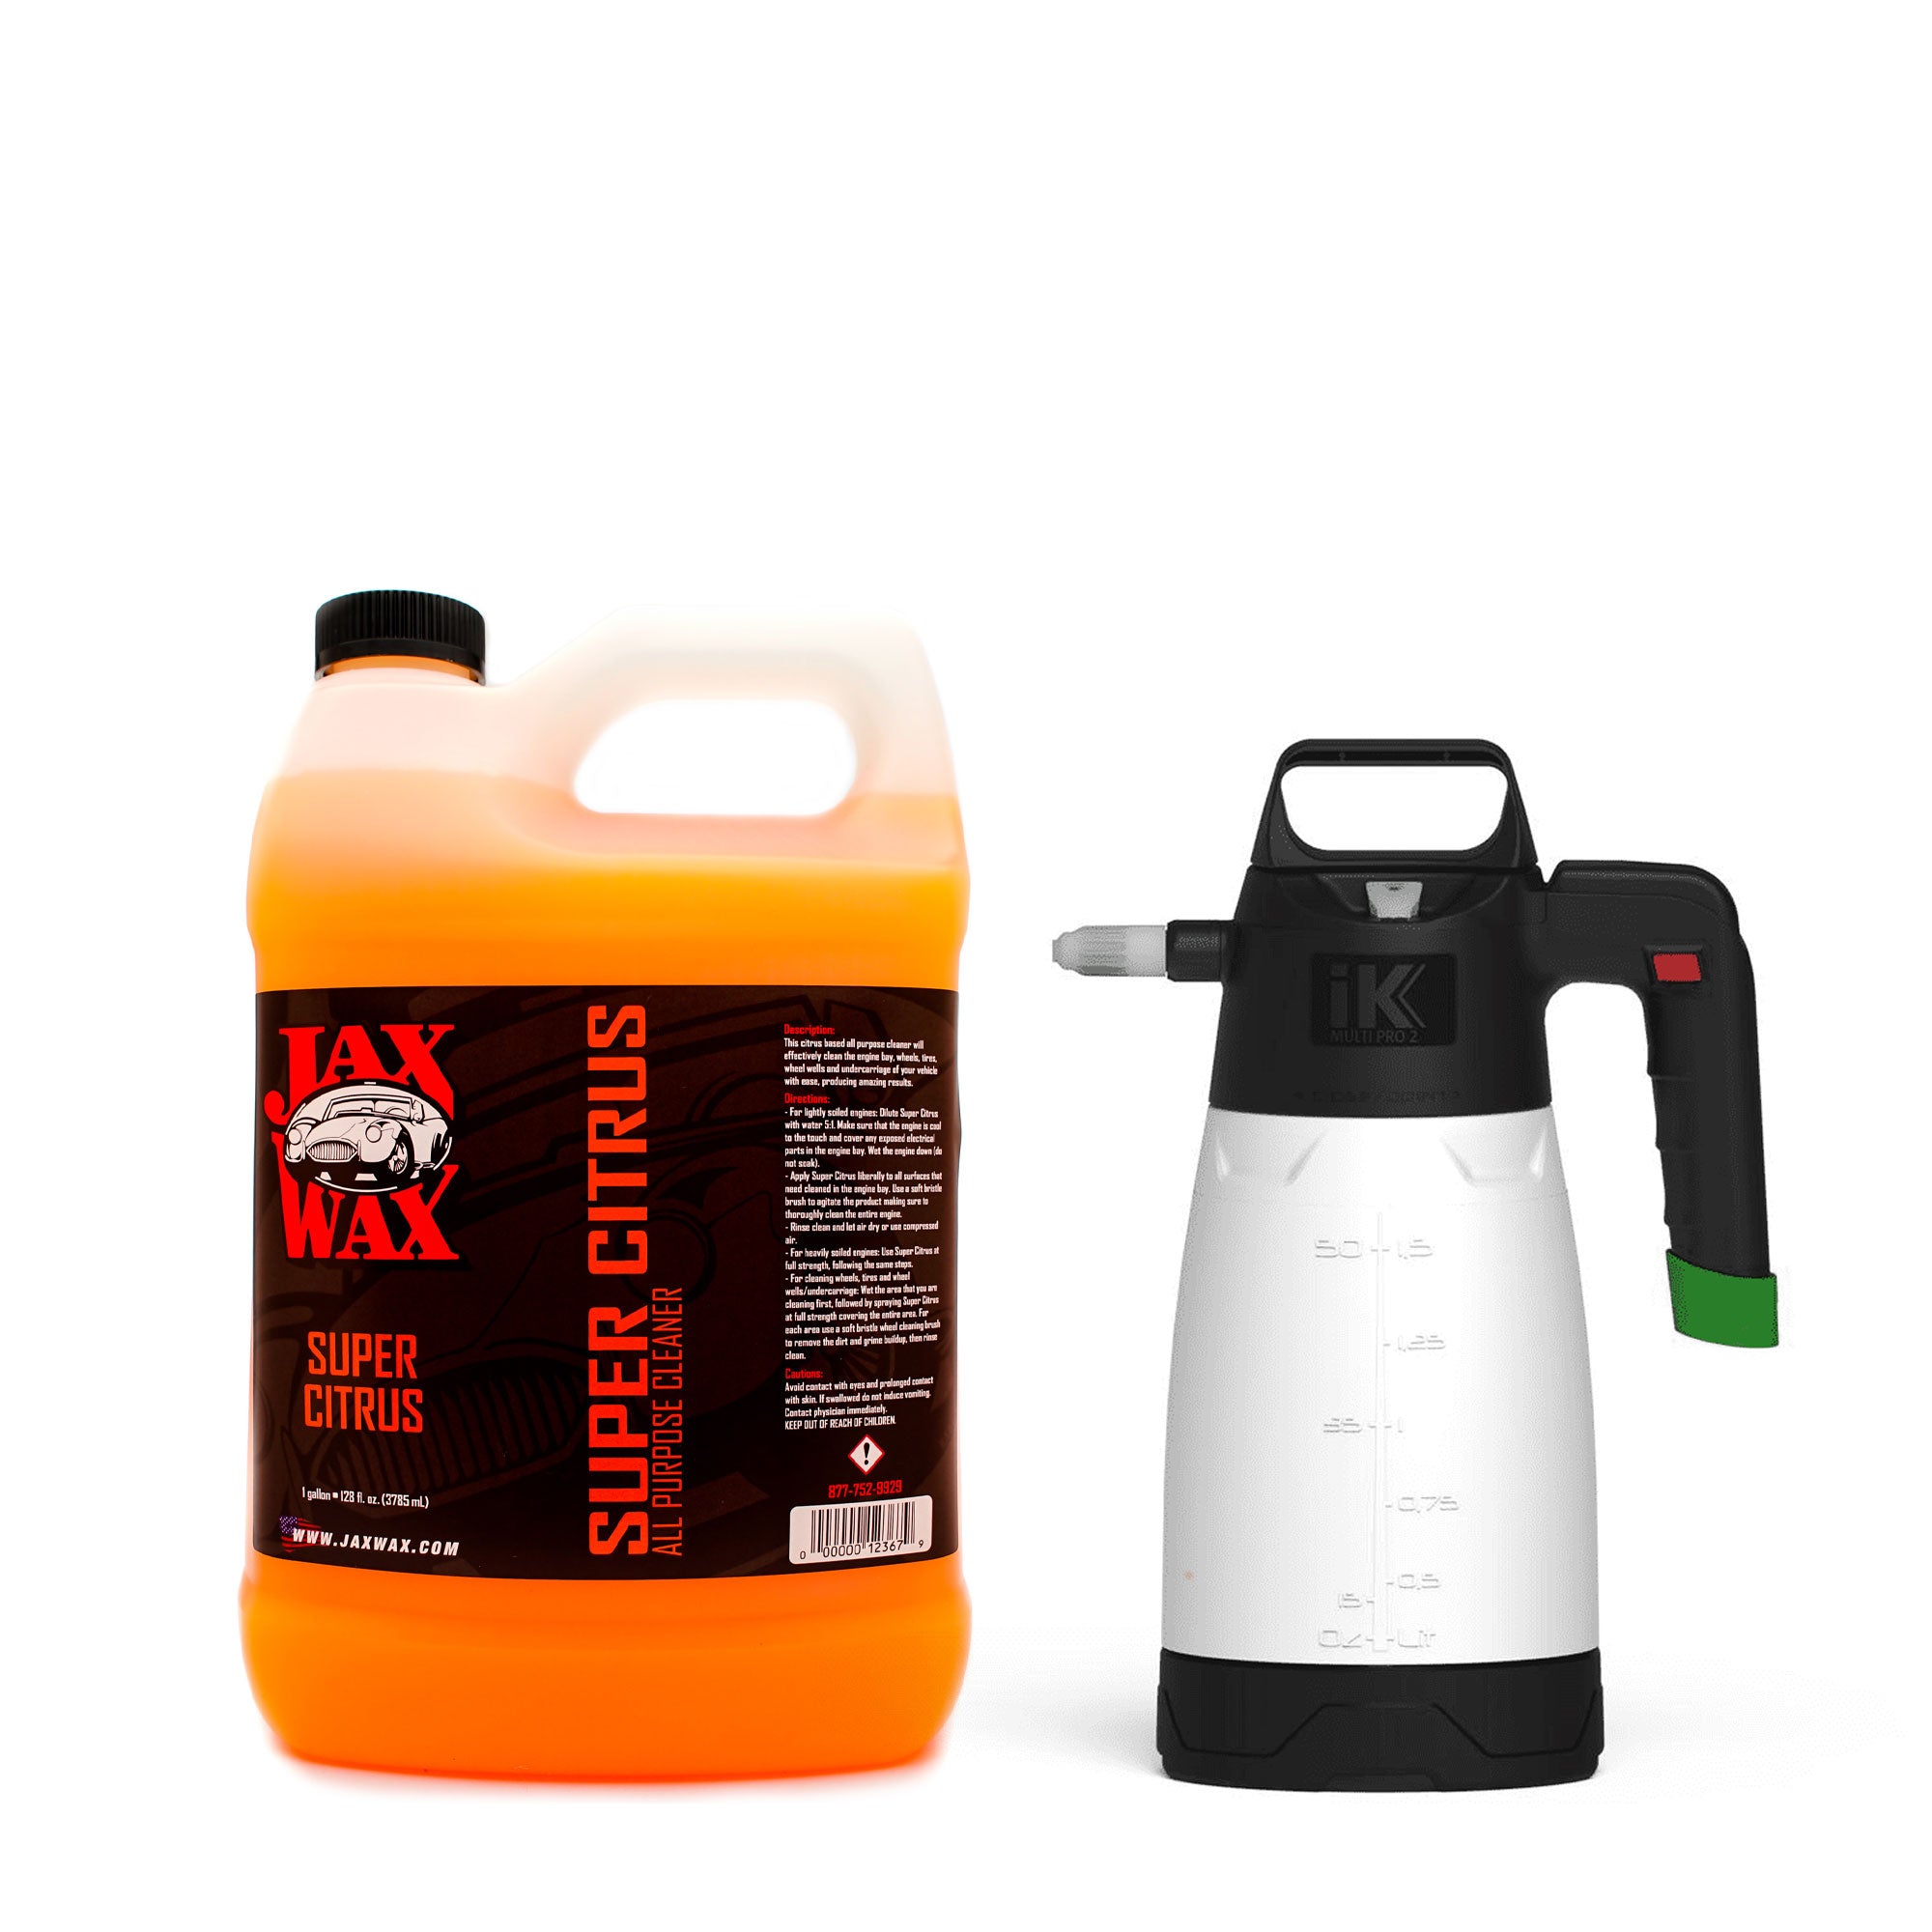 iK Pump Sprayer Combo KIT (2-Pack) 35 oz iK Foam 1.5 Professional Auto  Detailing Foamer + iK Multi 1.5 Multi-Purpose Pressure Sprayer